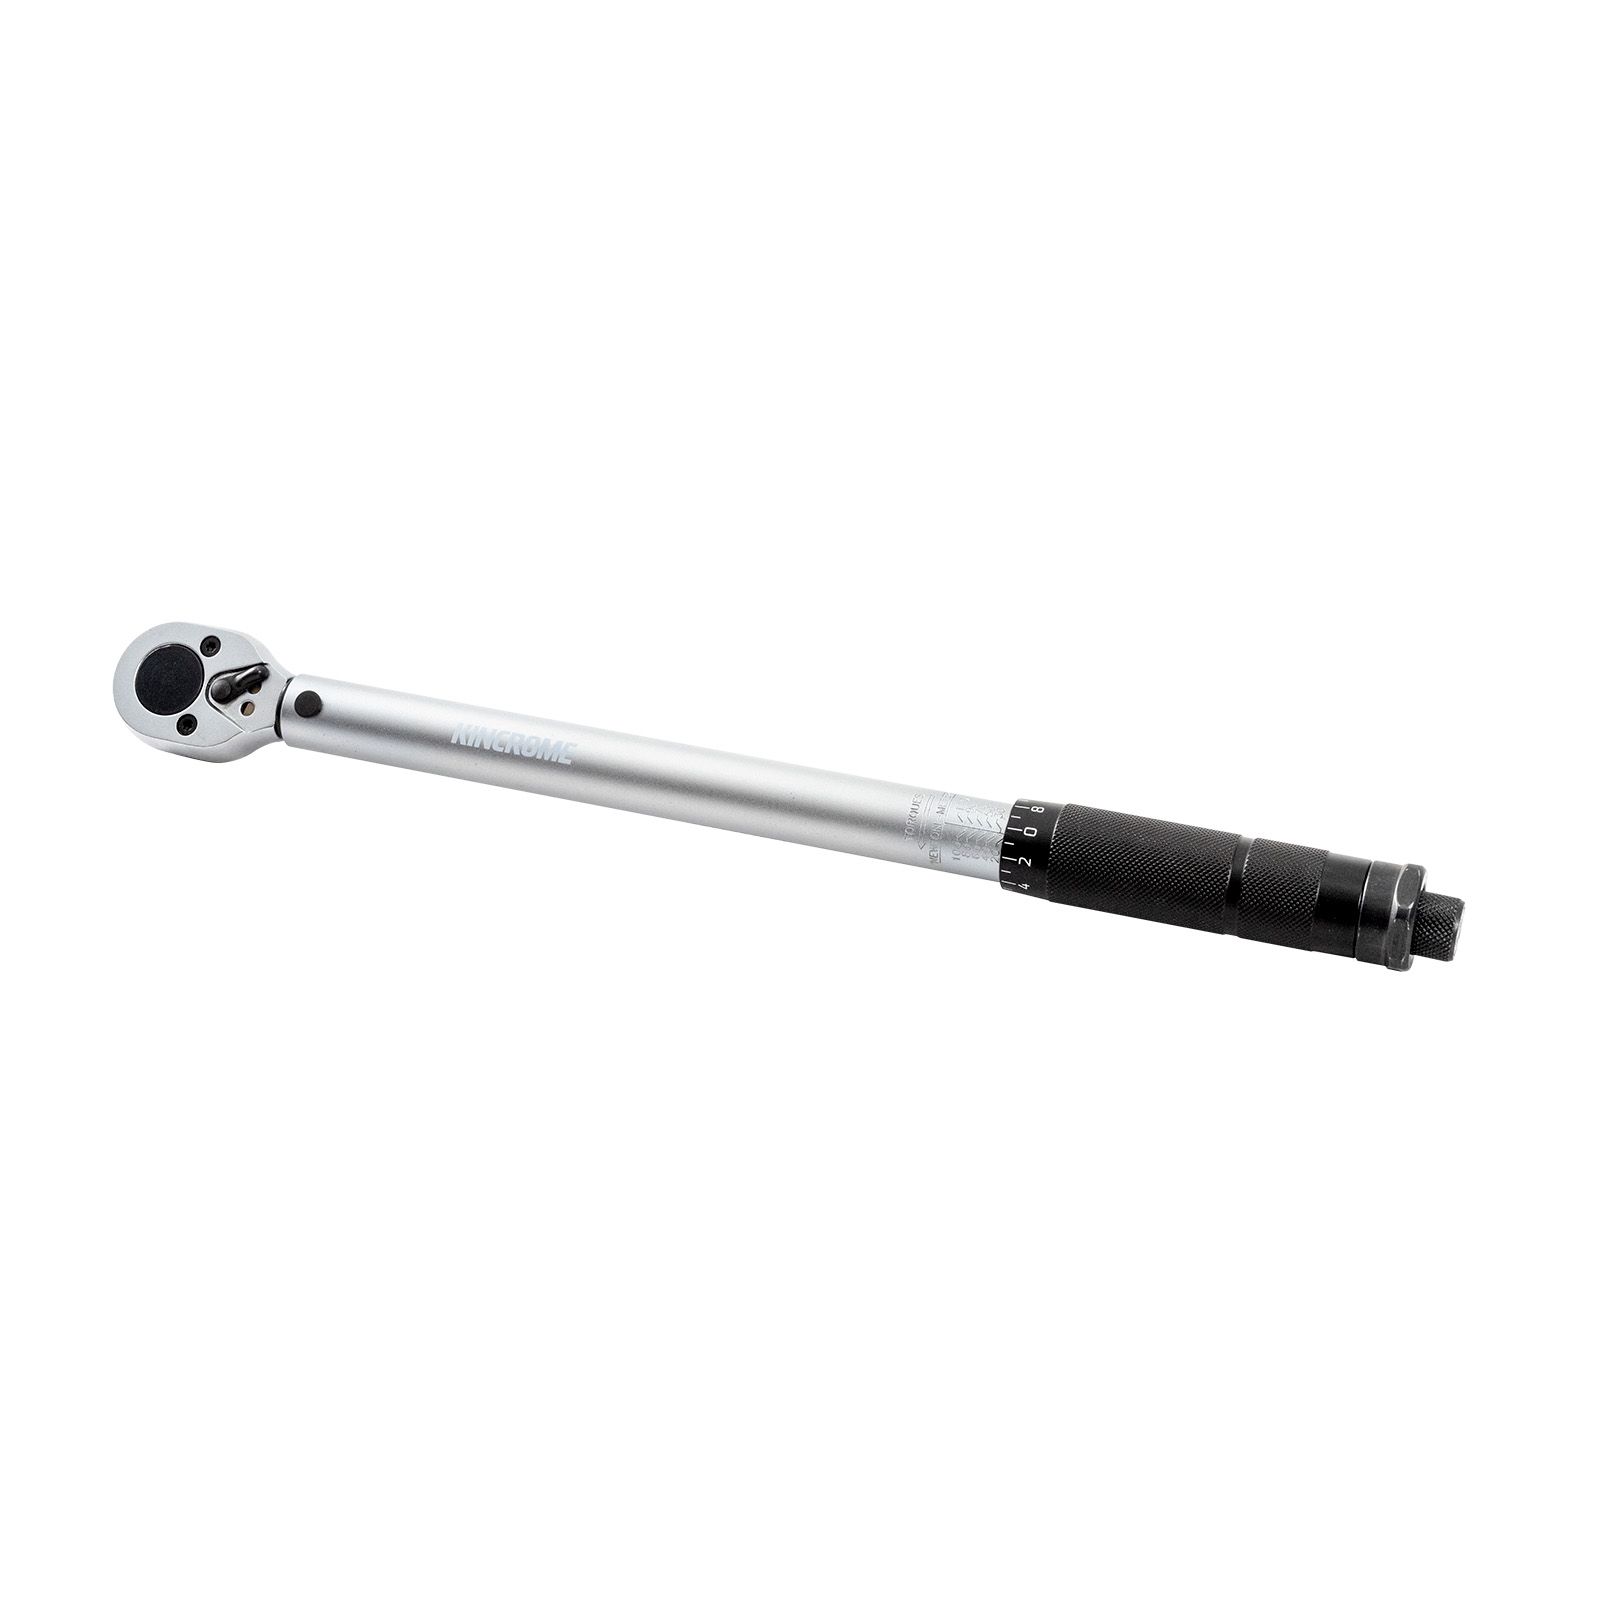 Micrometer Torque Wrench 3/8 Drive - Kincrome Tools - Kincrome